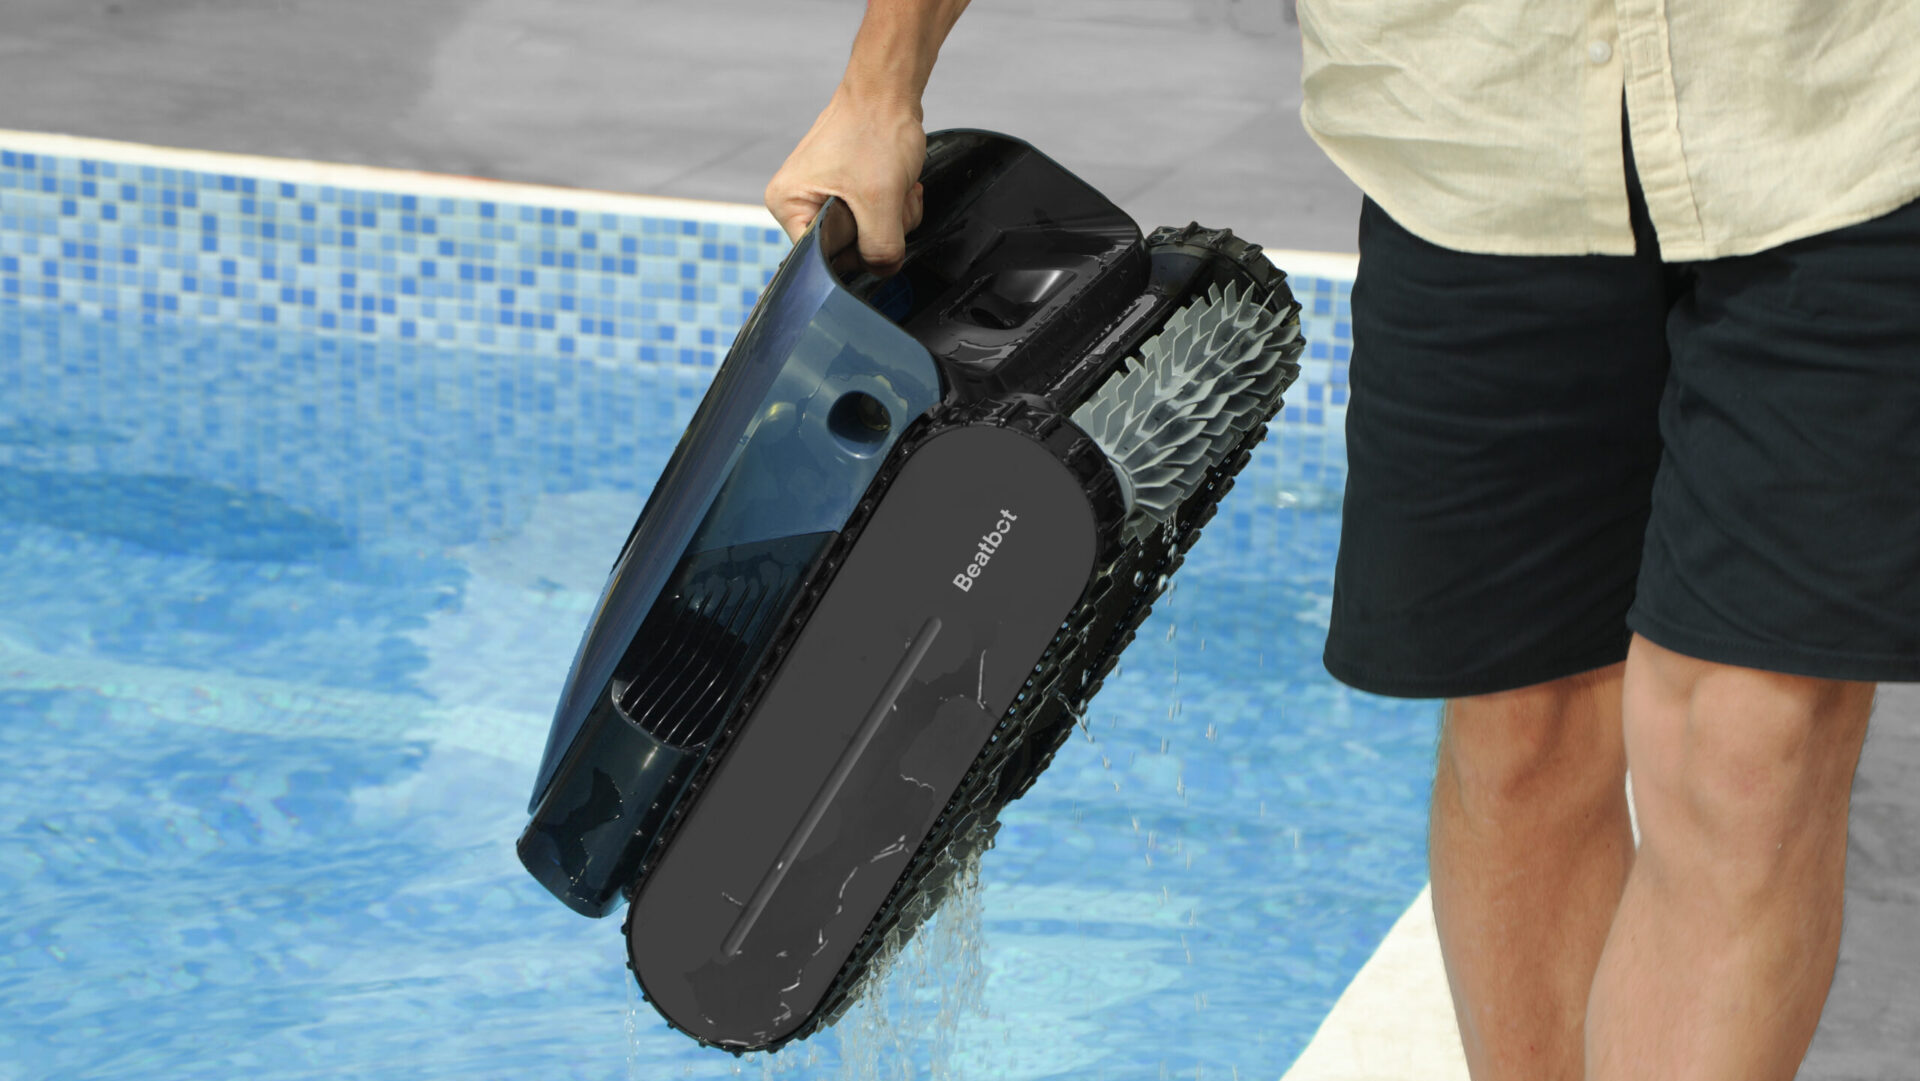 The best spring pool gadget